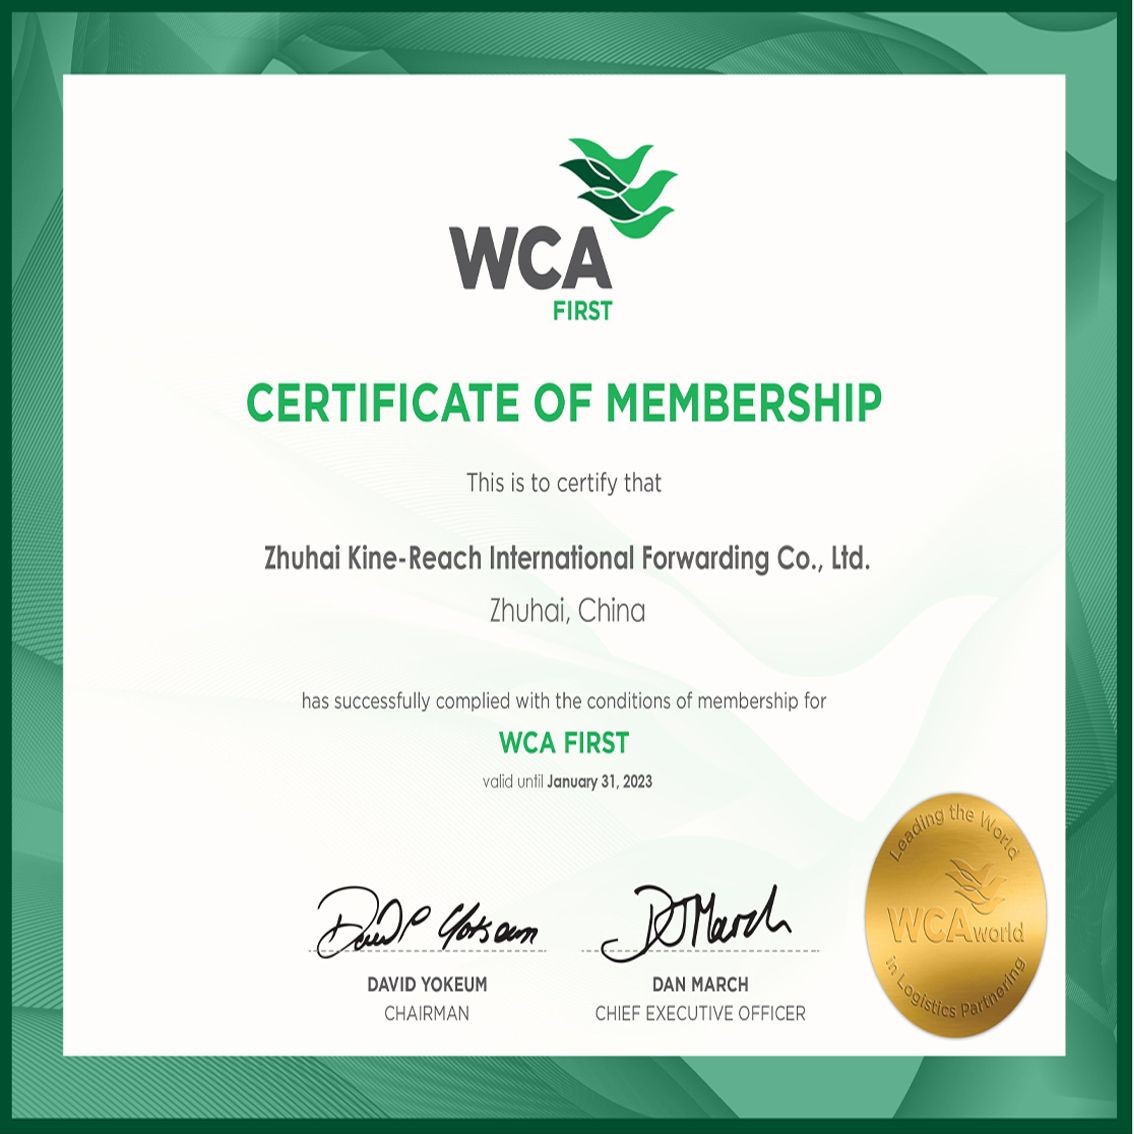 Member of WCA Alliance